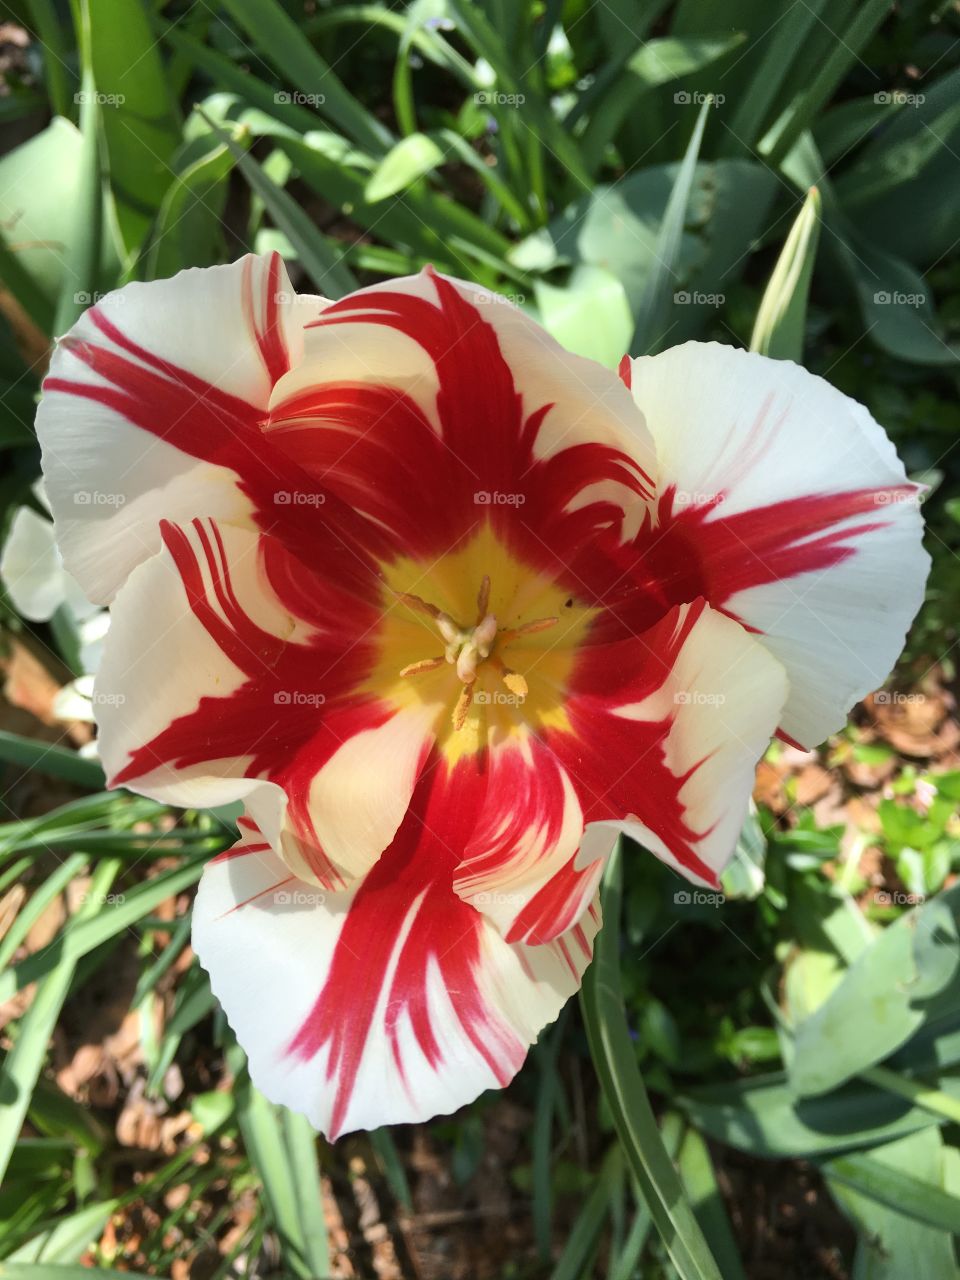 I love tulips! 